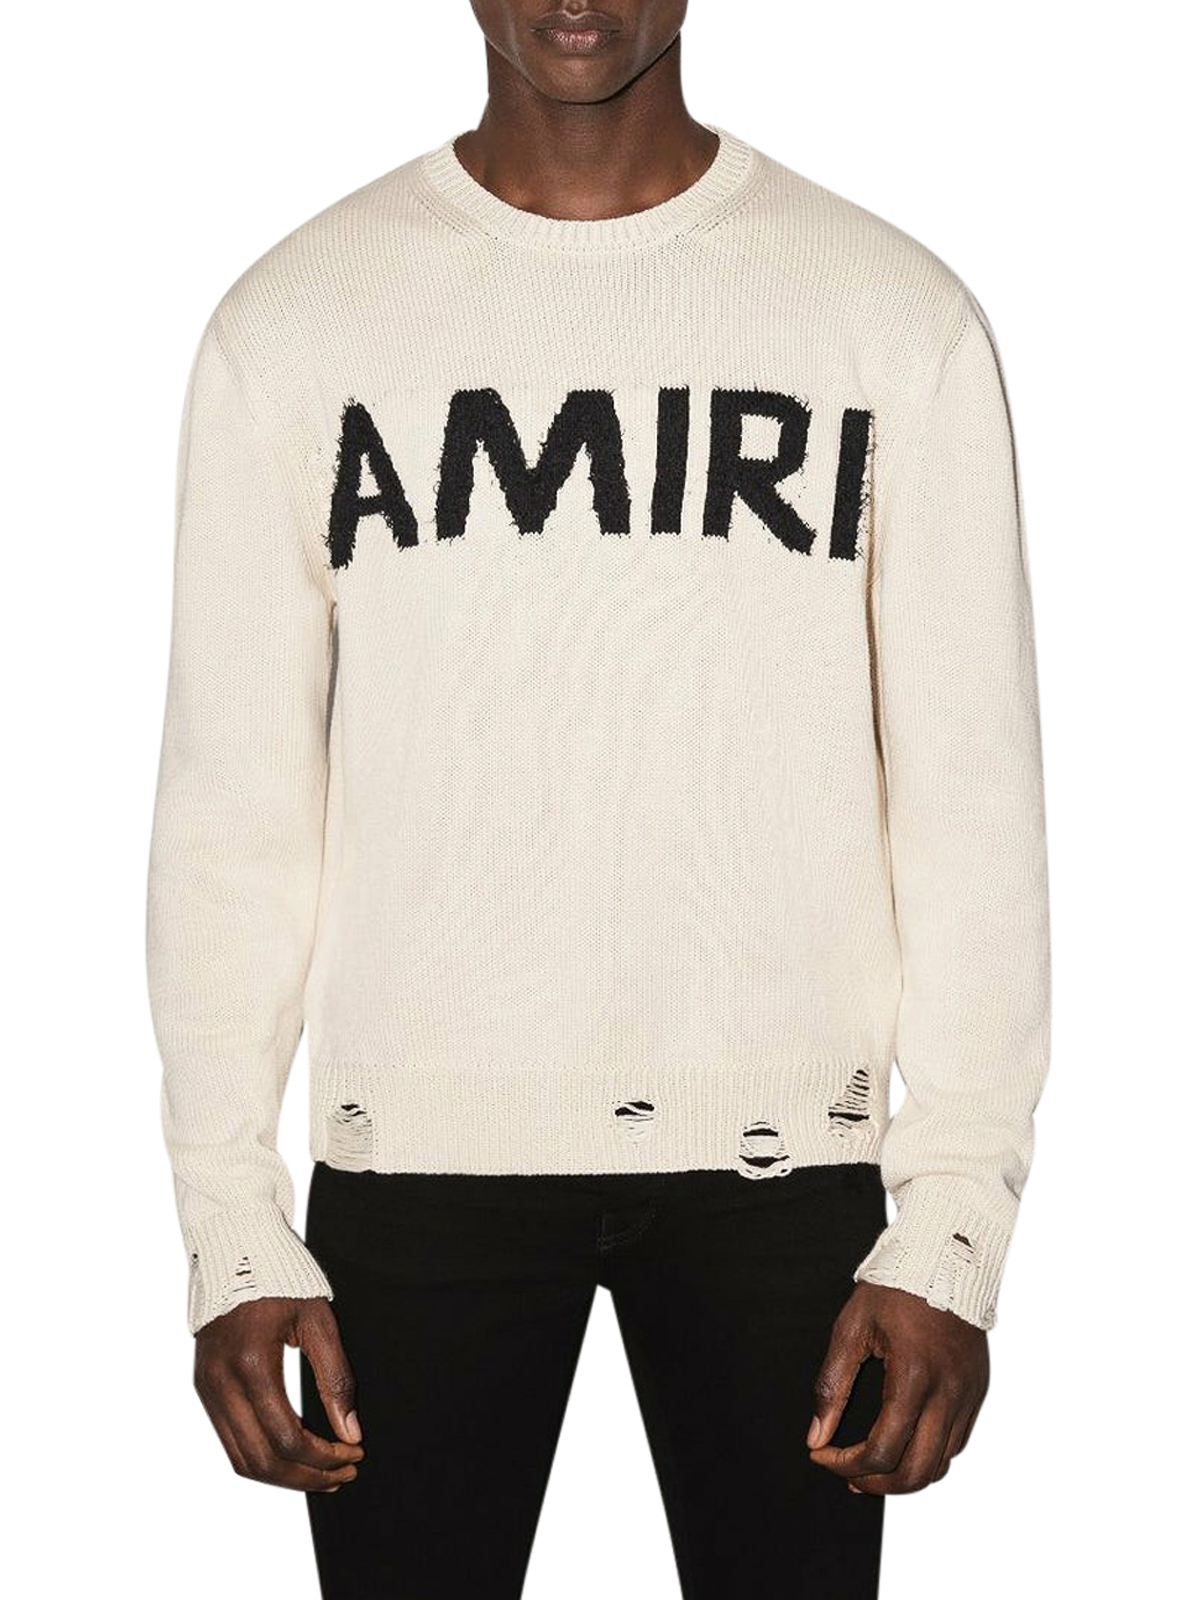 Amiri White Distressed Cotton Crew Neck T-Shirt M Amiri